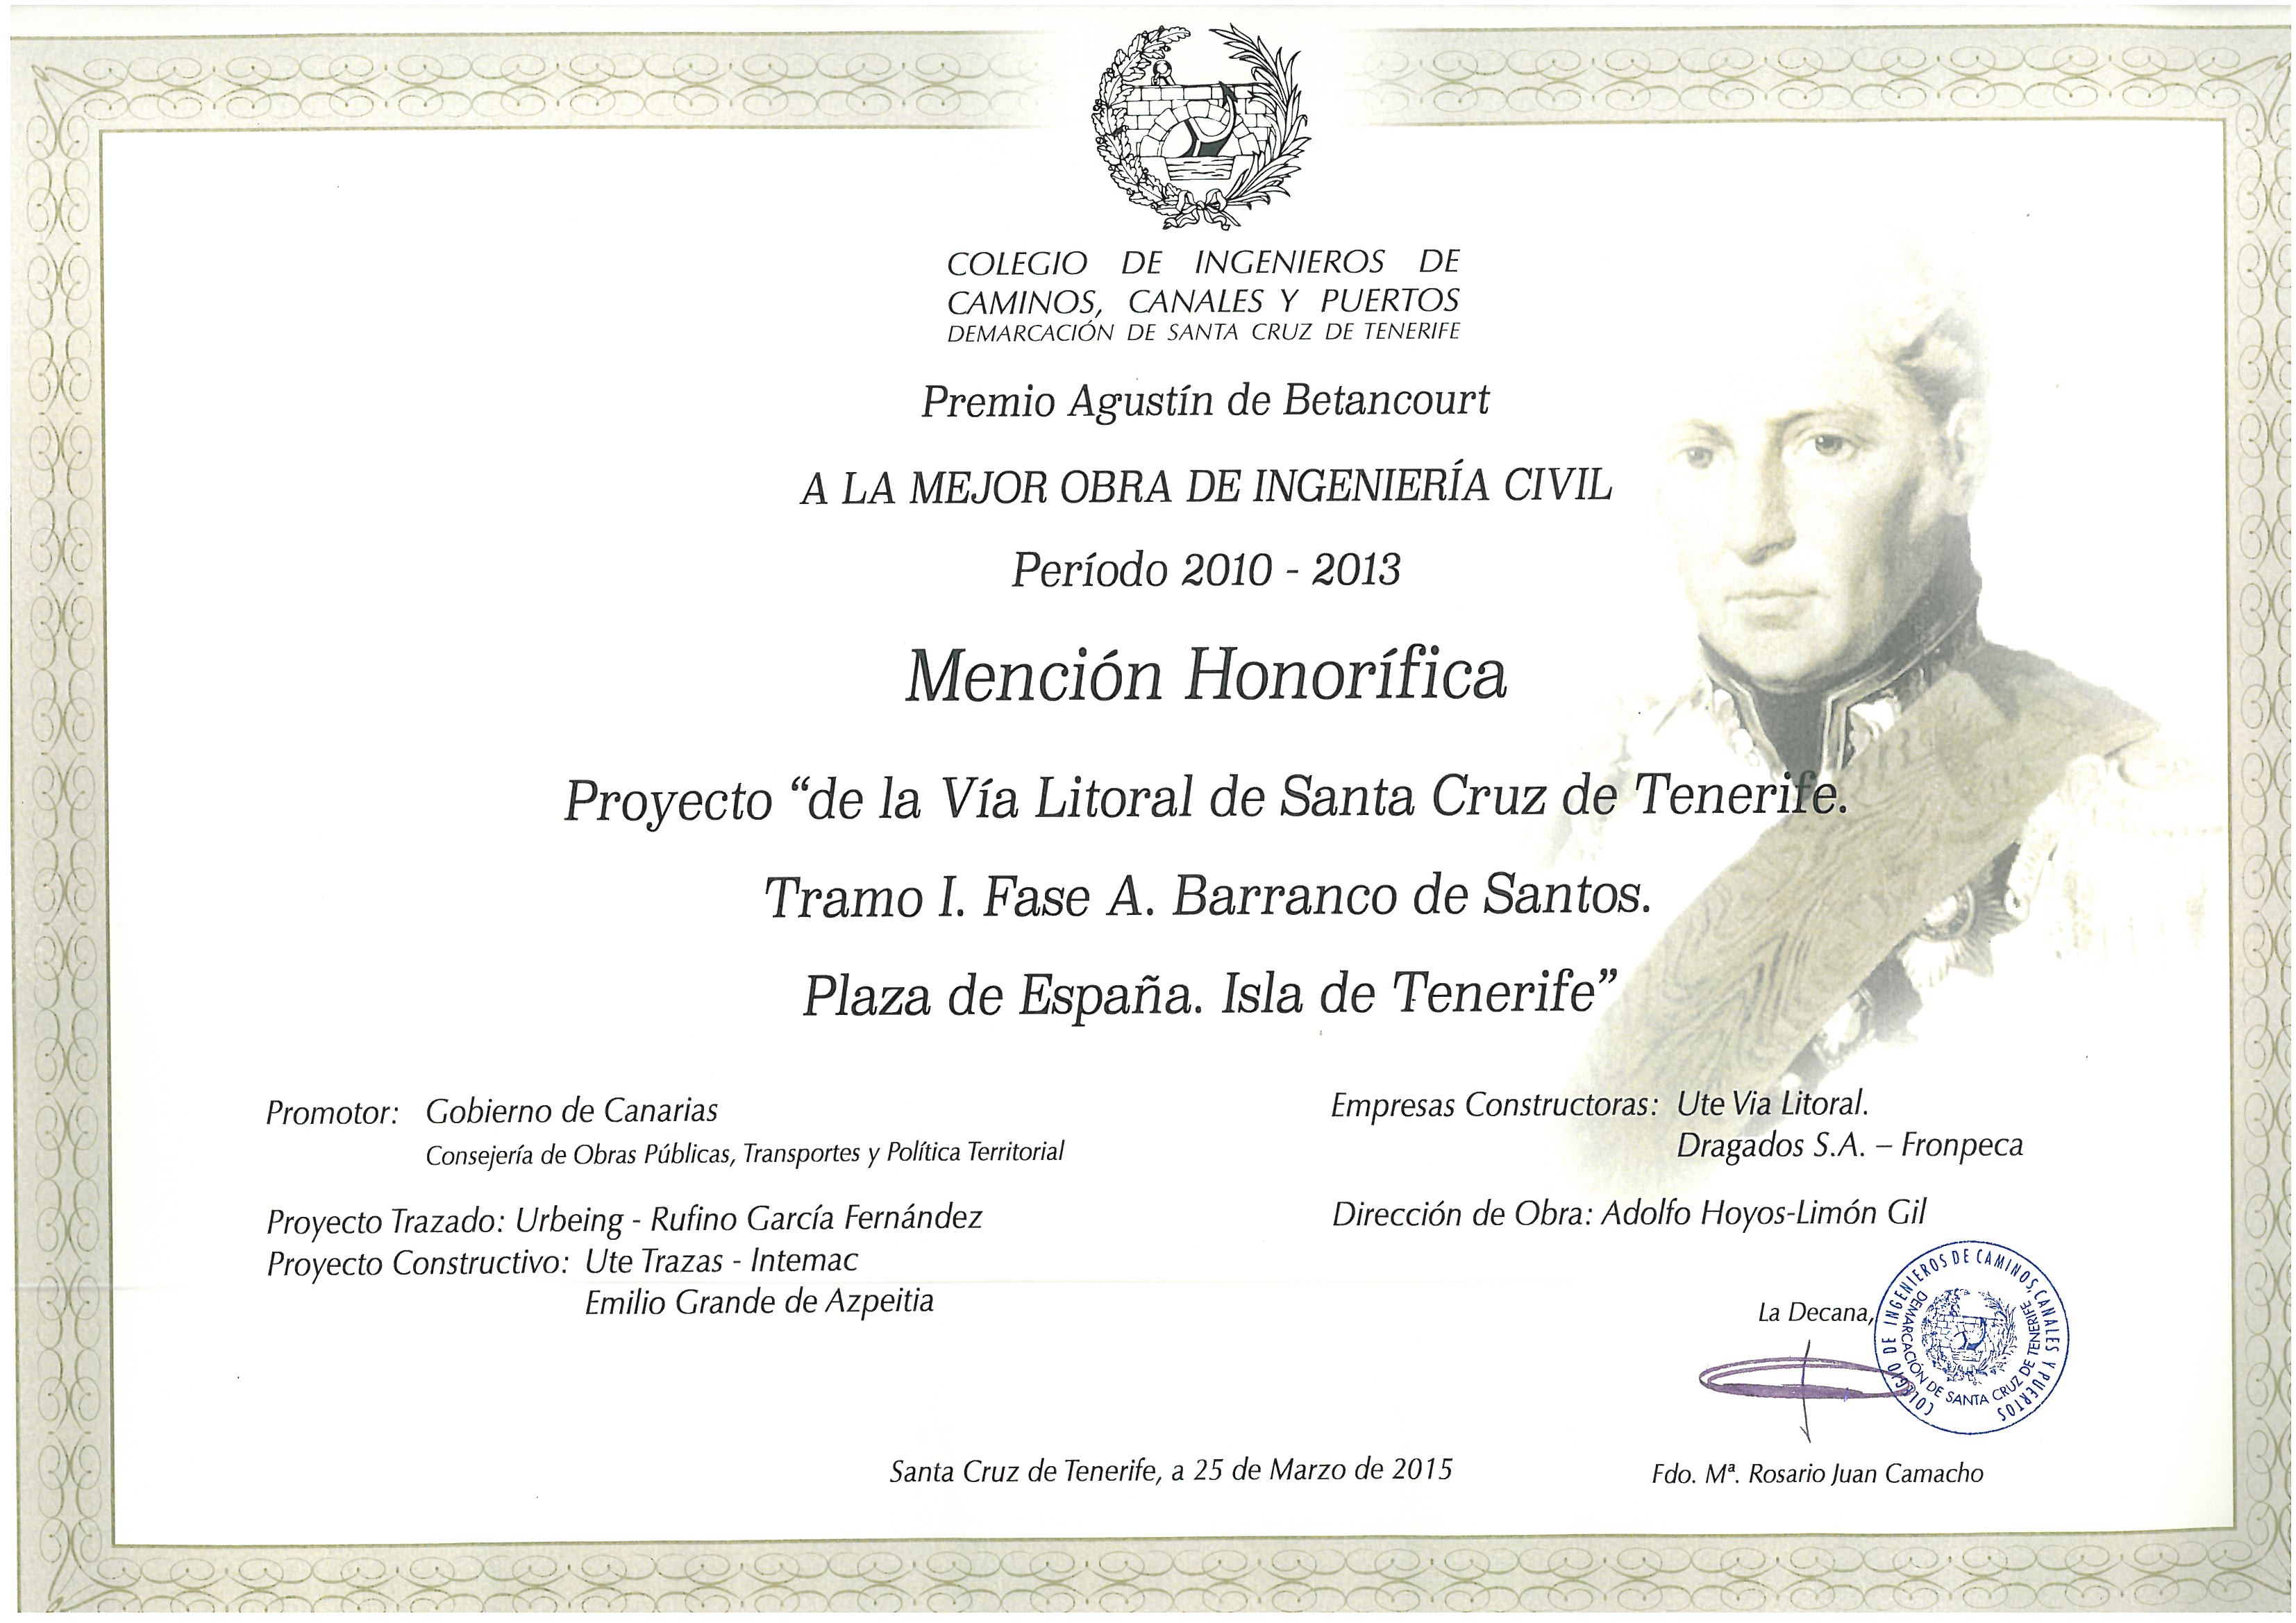 TRAZAS Ingeniería recibe el premio Agustín Betancourt